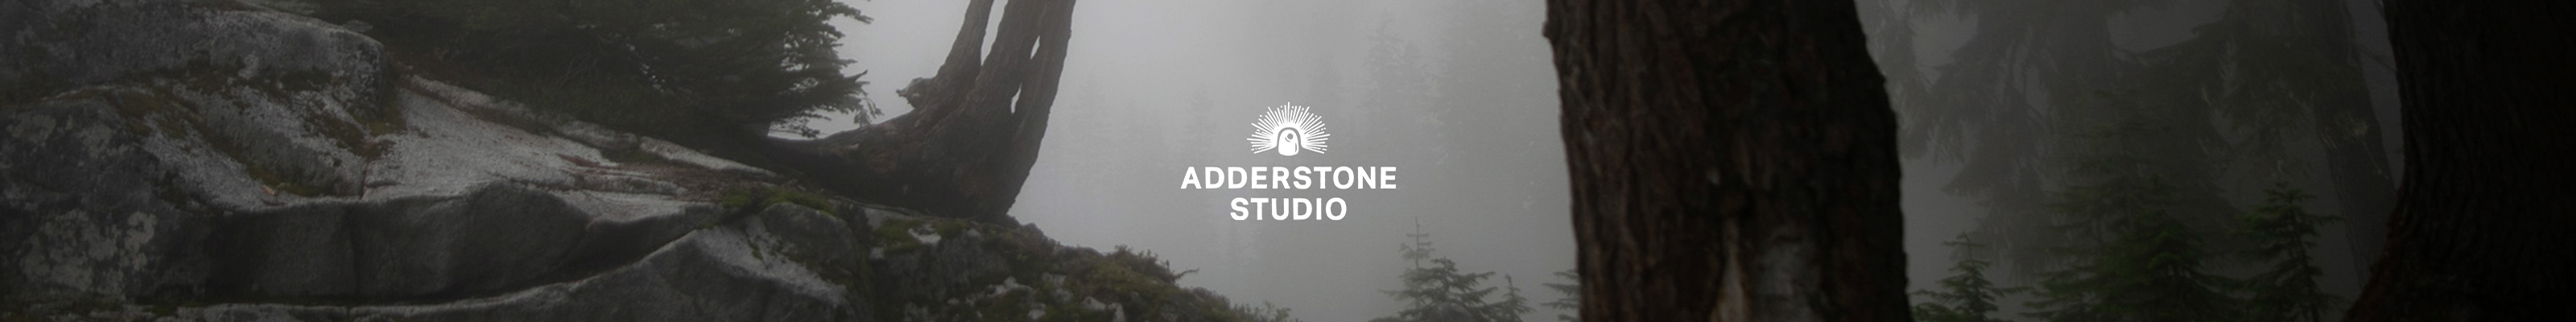 Баннер профиля Adderstone Studio